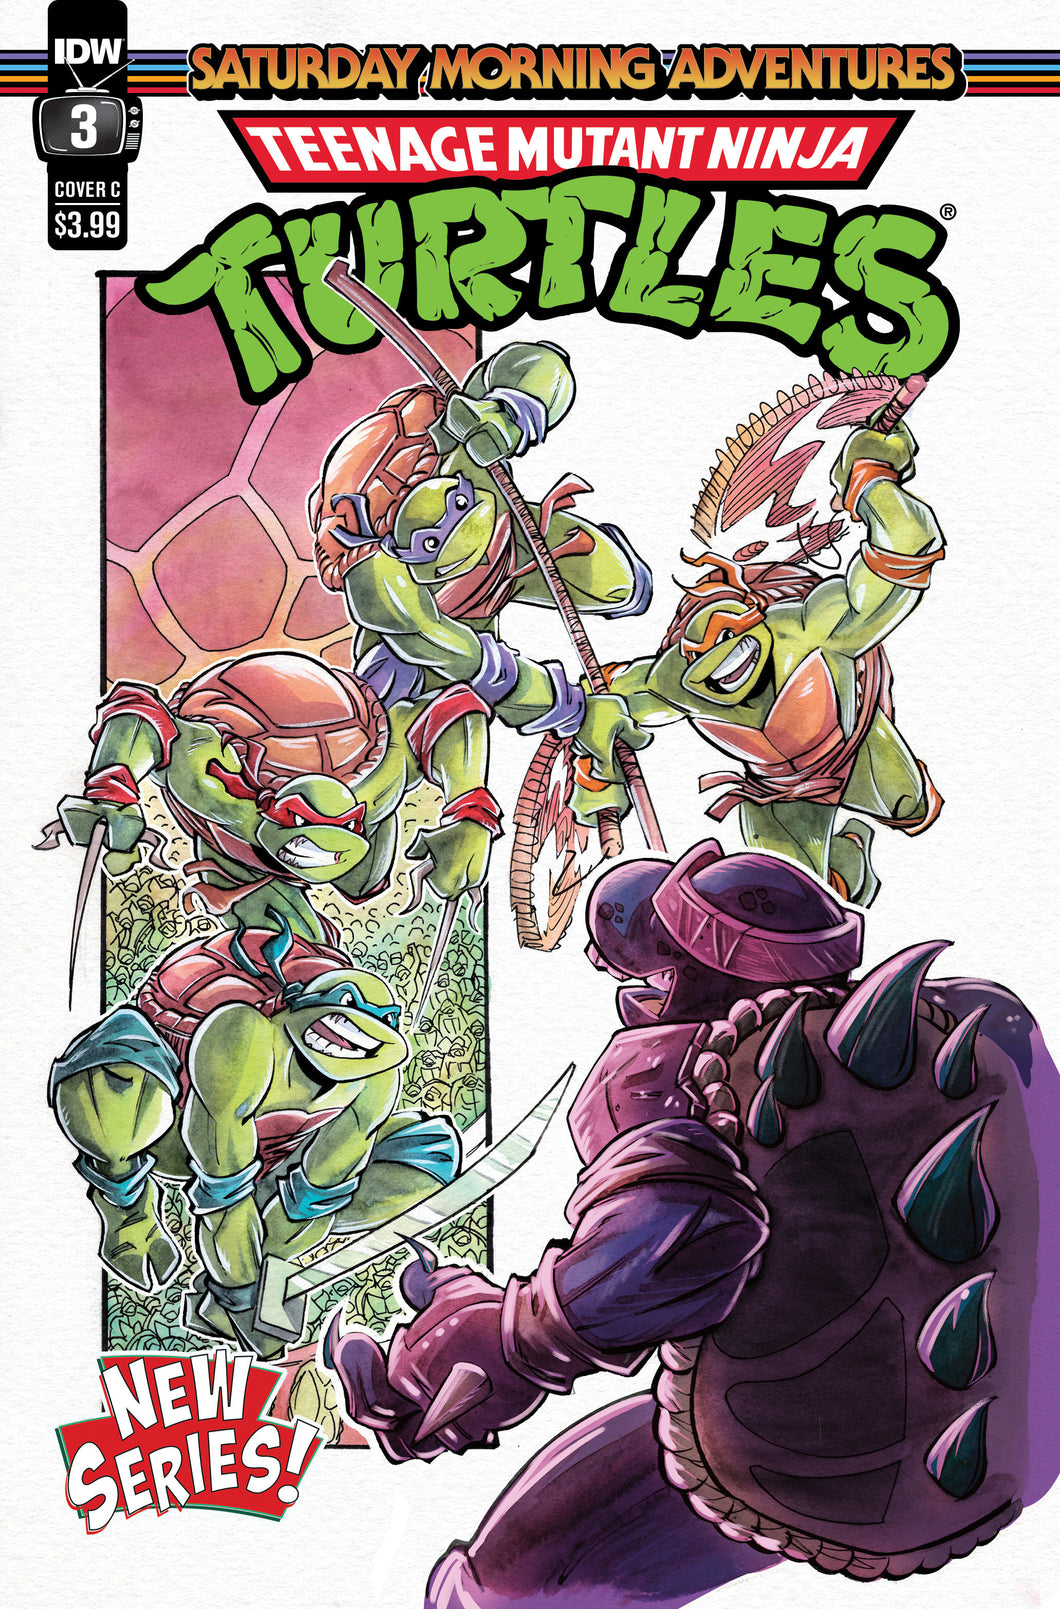 Teenage Mutant Ninja Turtles: Saturday Morning Adventures (2023-) #3 Variant C (Daley)